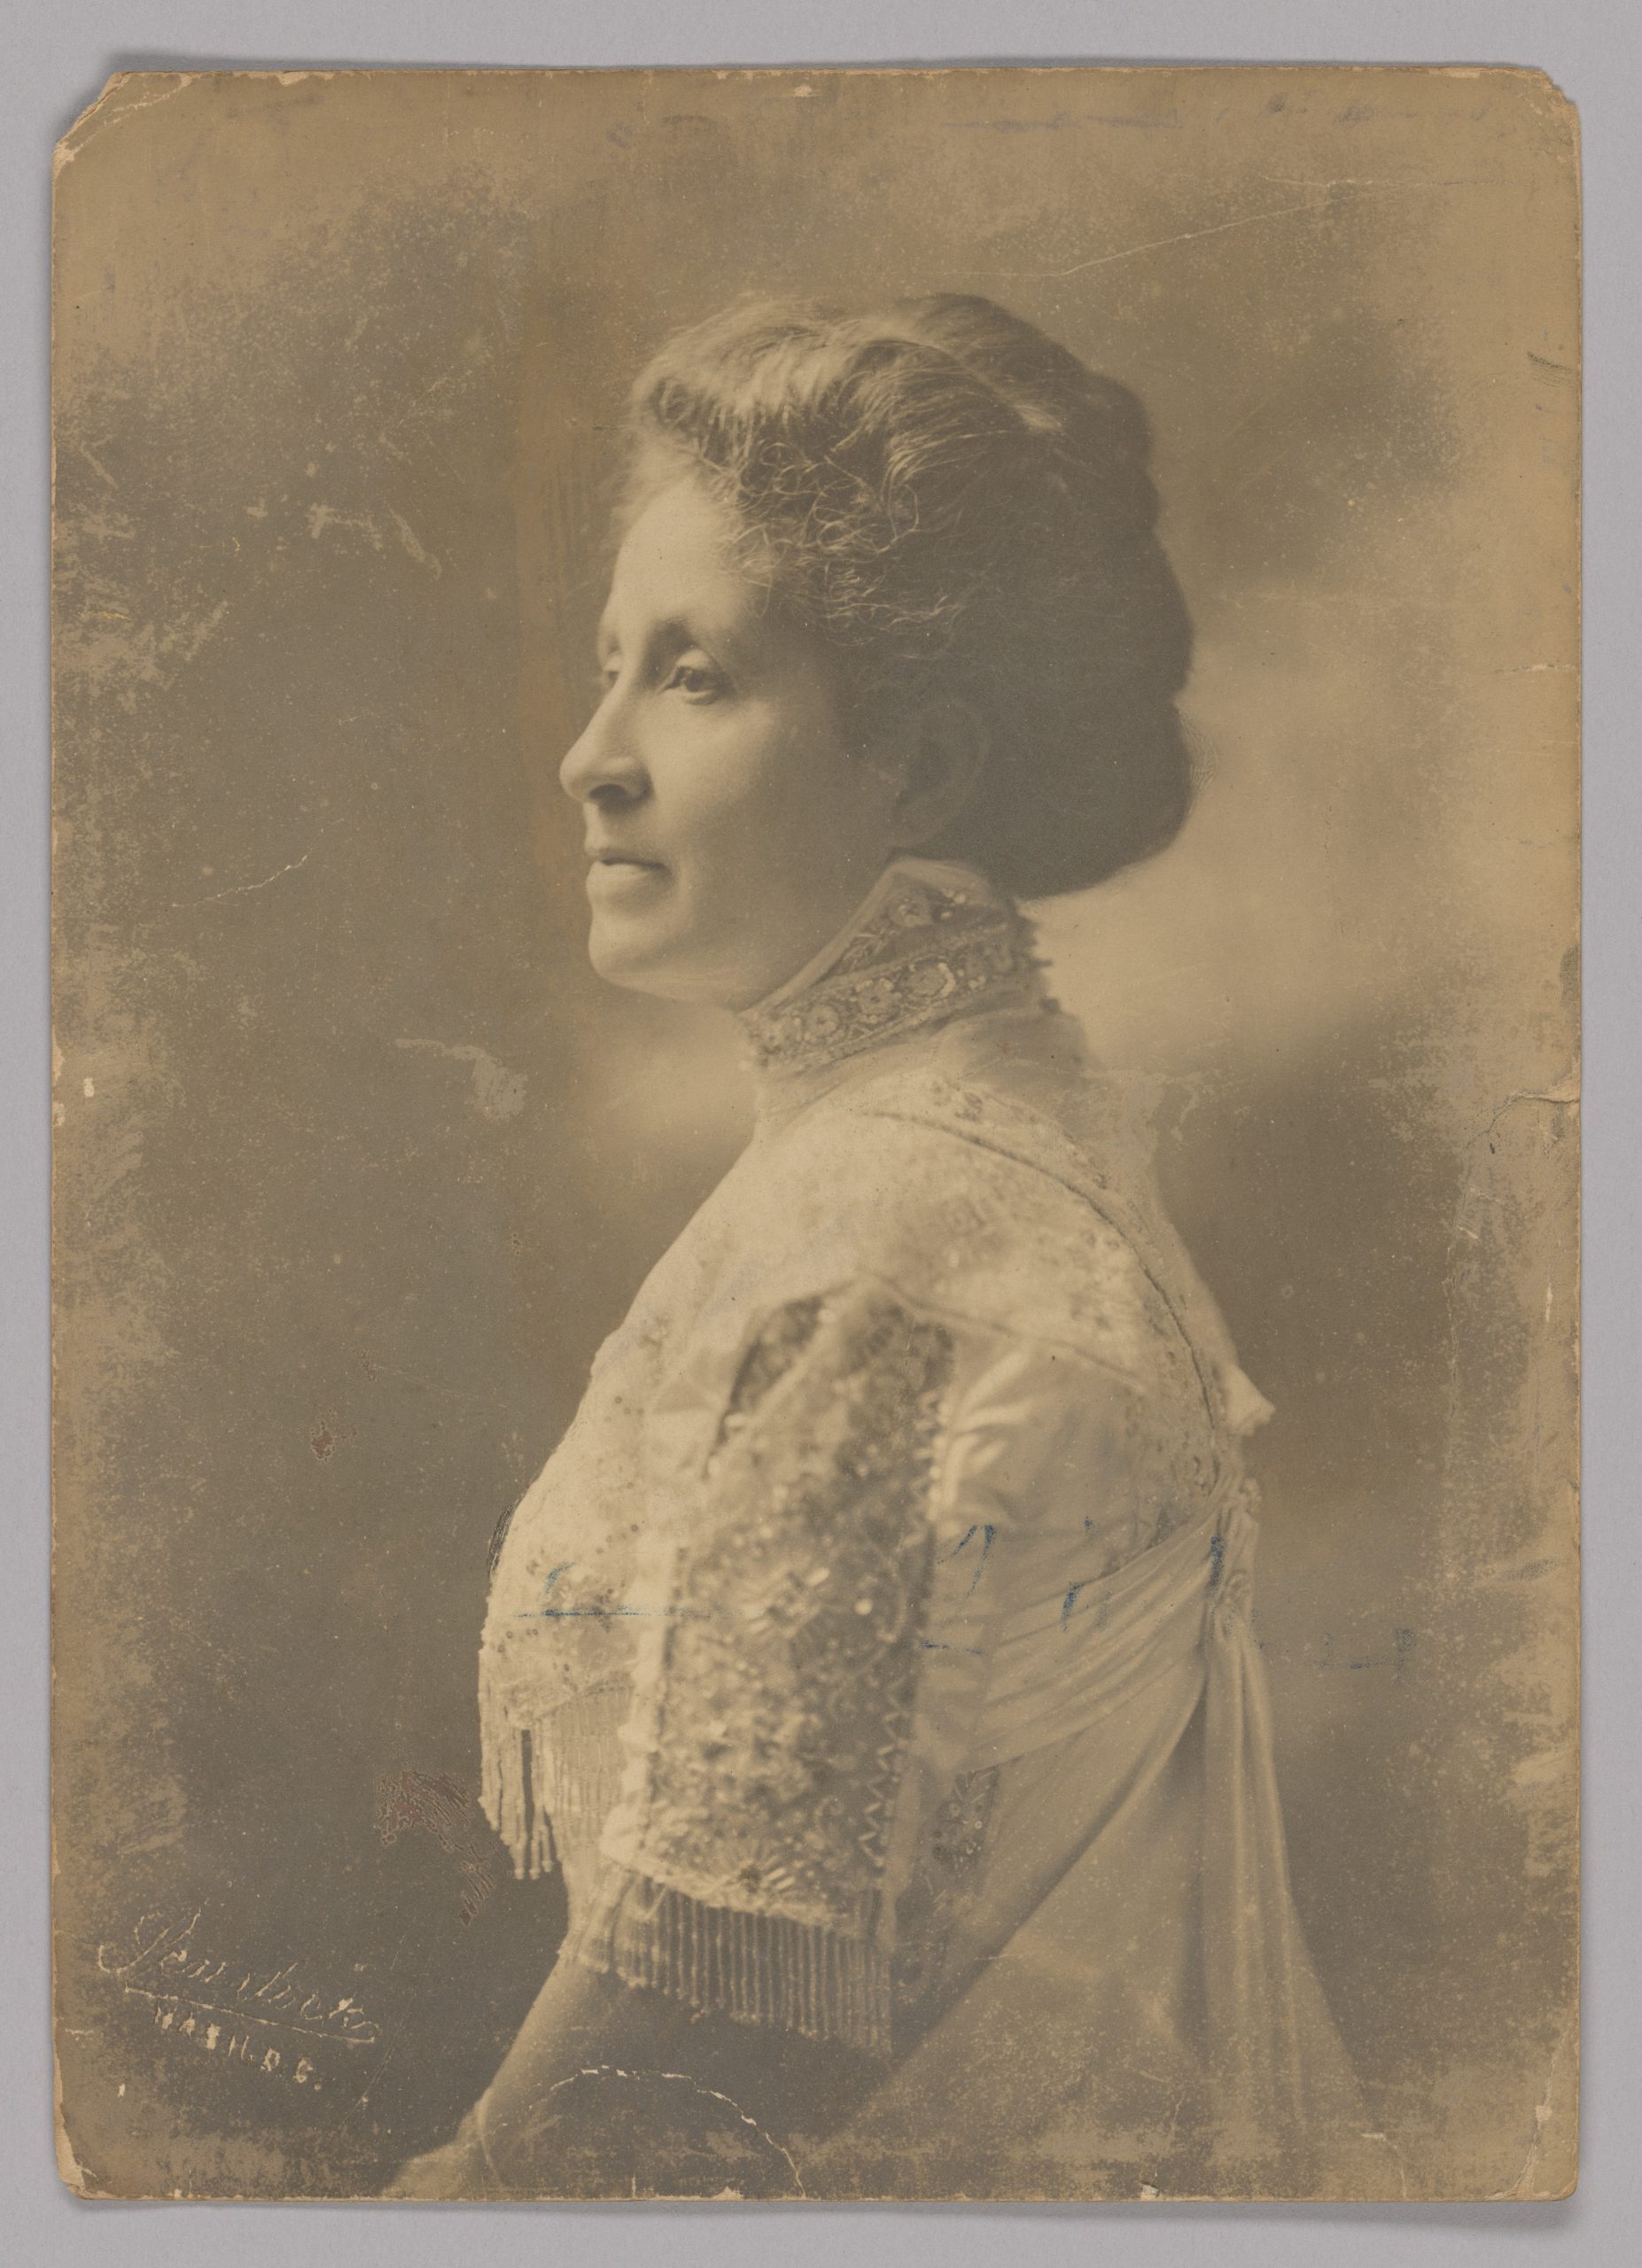 a photograph of Mary Church Terrell